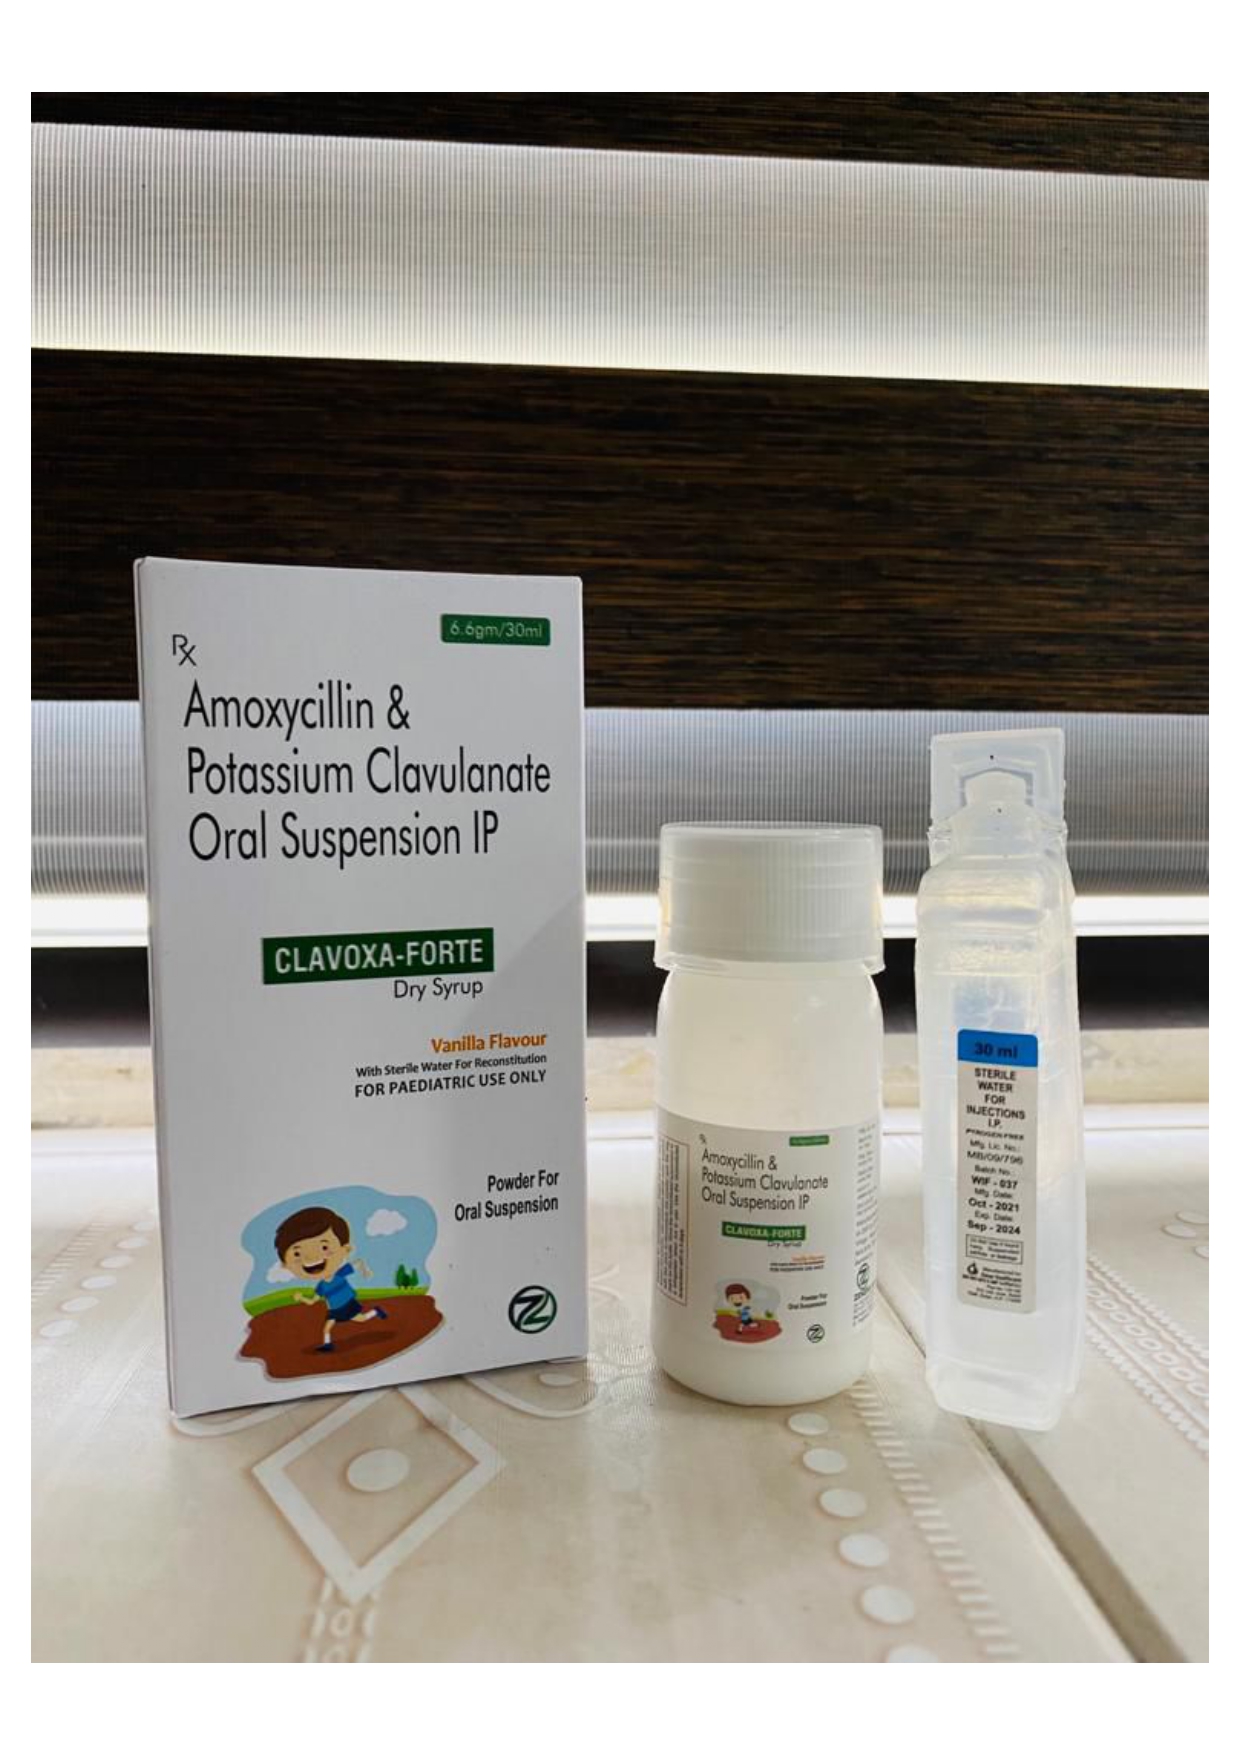 amoxycillin trihydrate 400mg with clavulanic acid 57mg dry syrupwith water